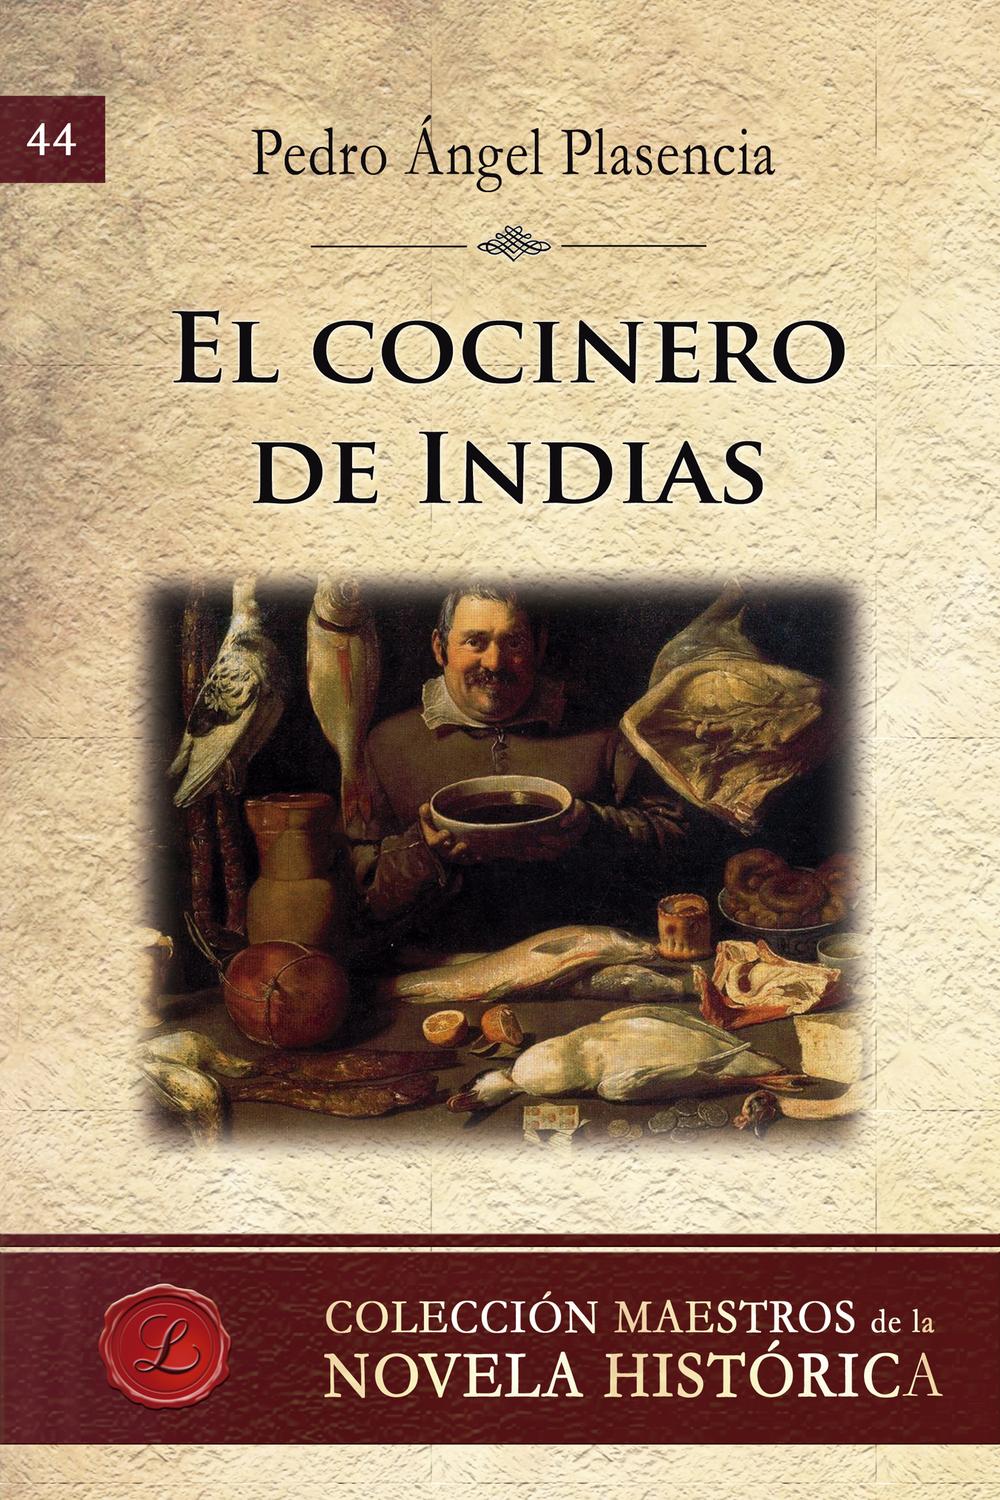 De Reyes y Bastardos (Pedro I de Castilla - Libro I): Novela histórica  (Spanish Edition)